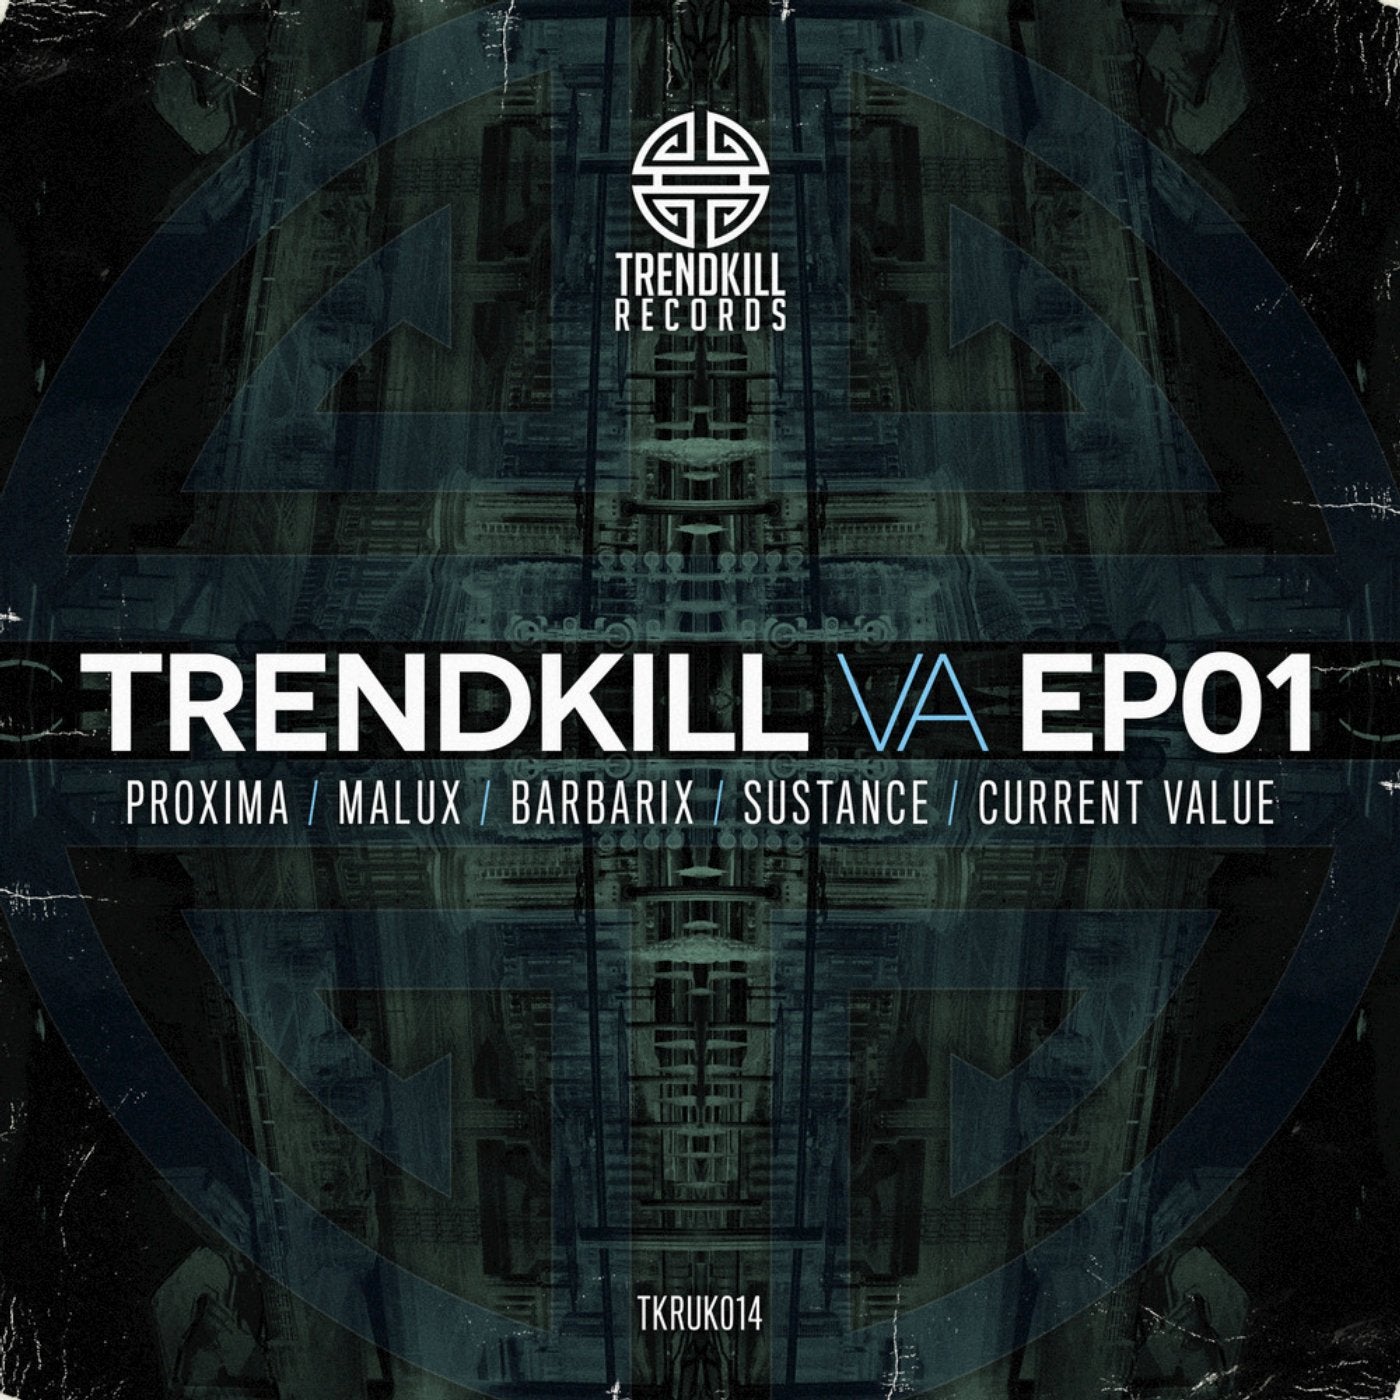 Trendkill VA EP01